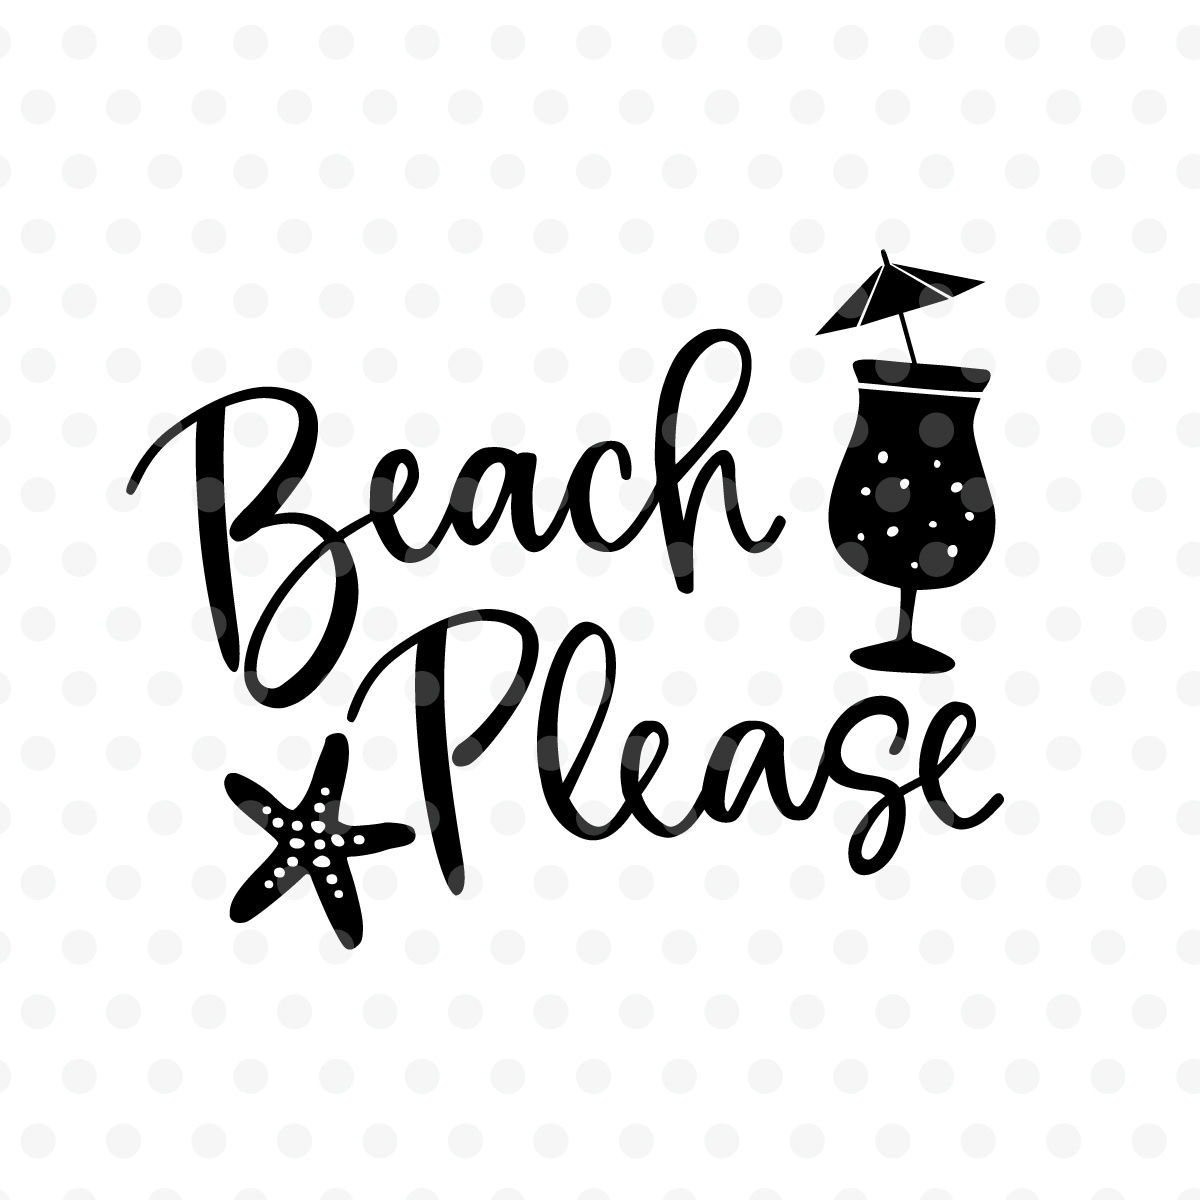 Beach Please Svg Eps Png Dxf By Tabita S Shop Thehungryjpeg Com